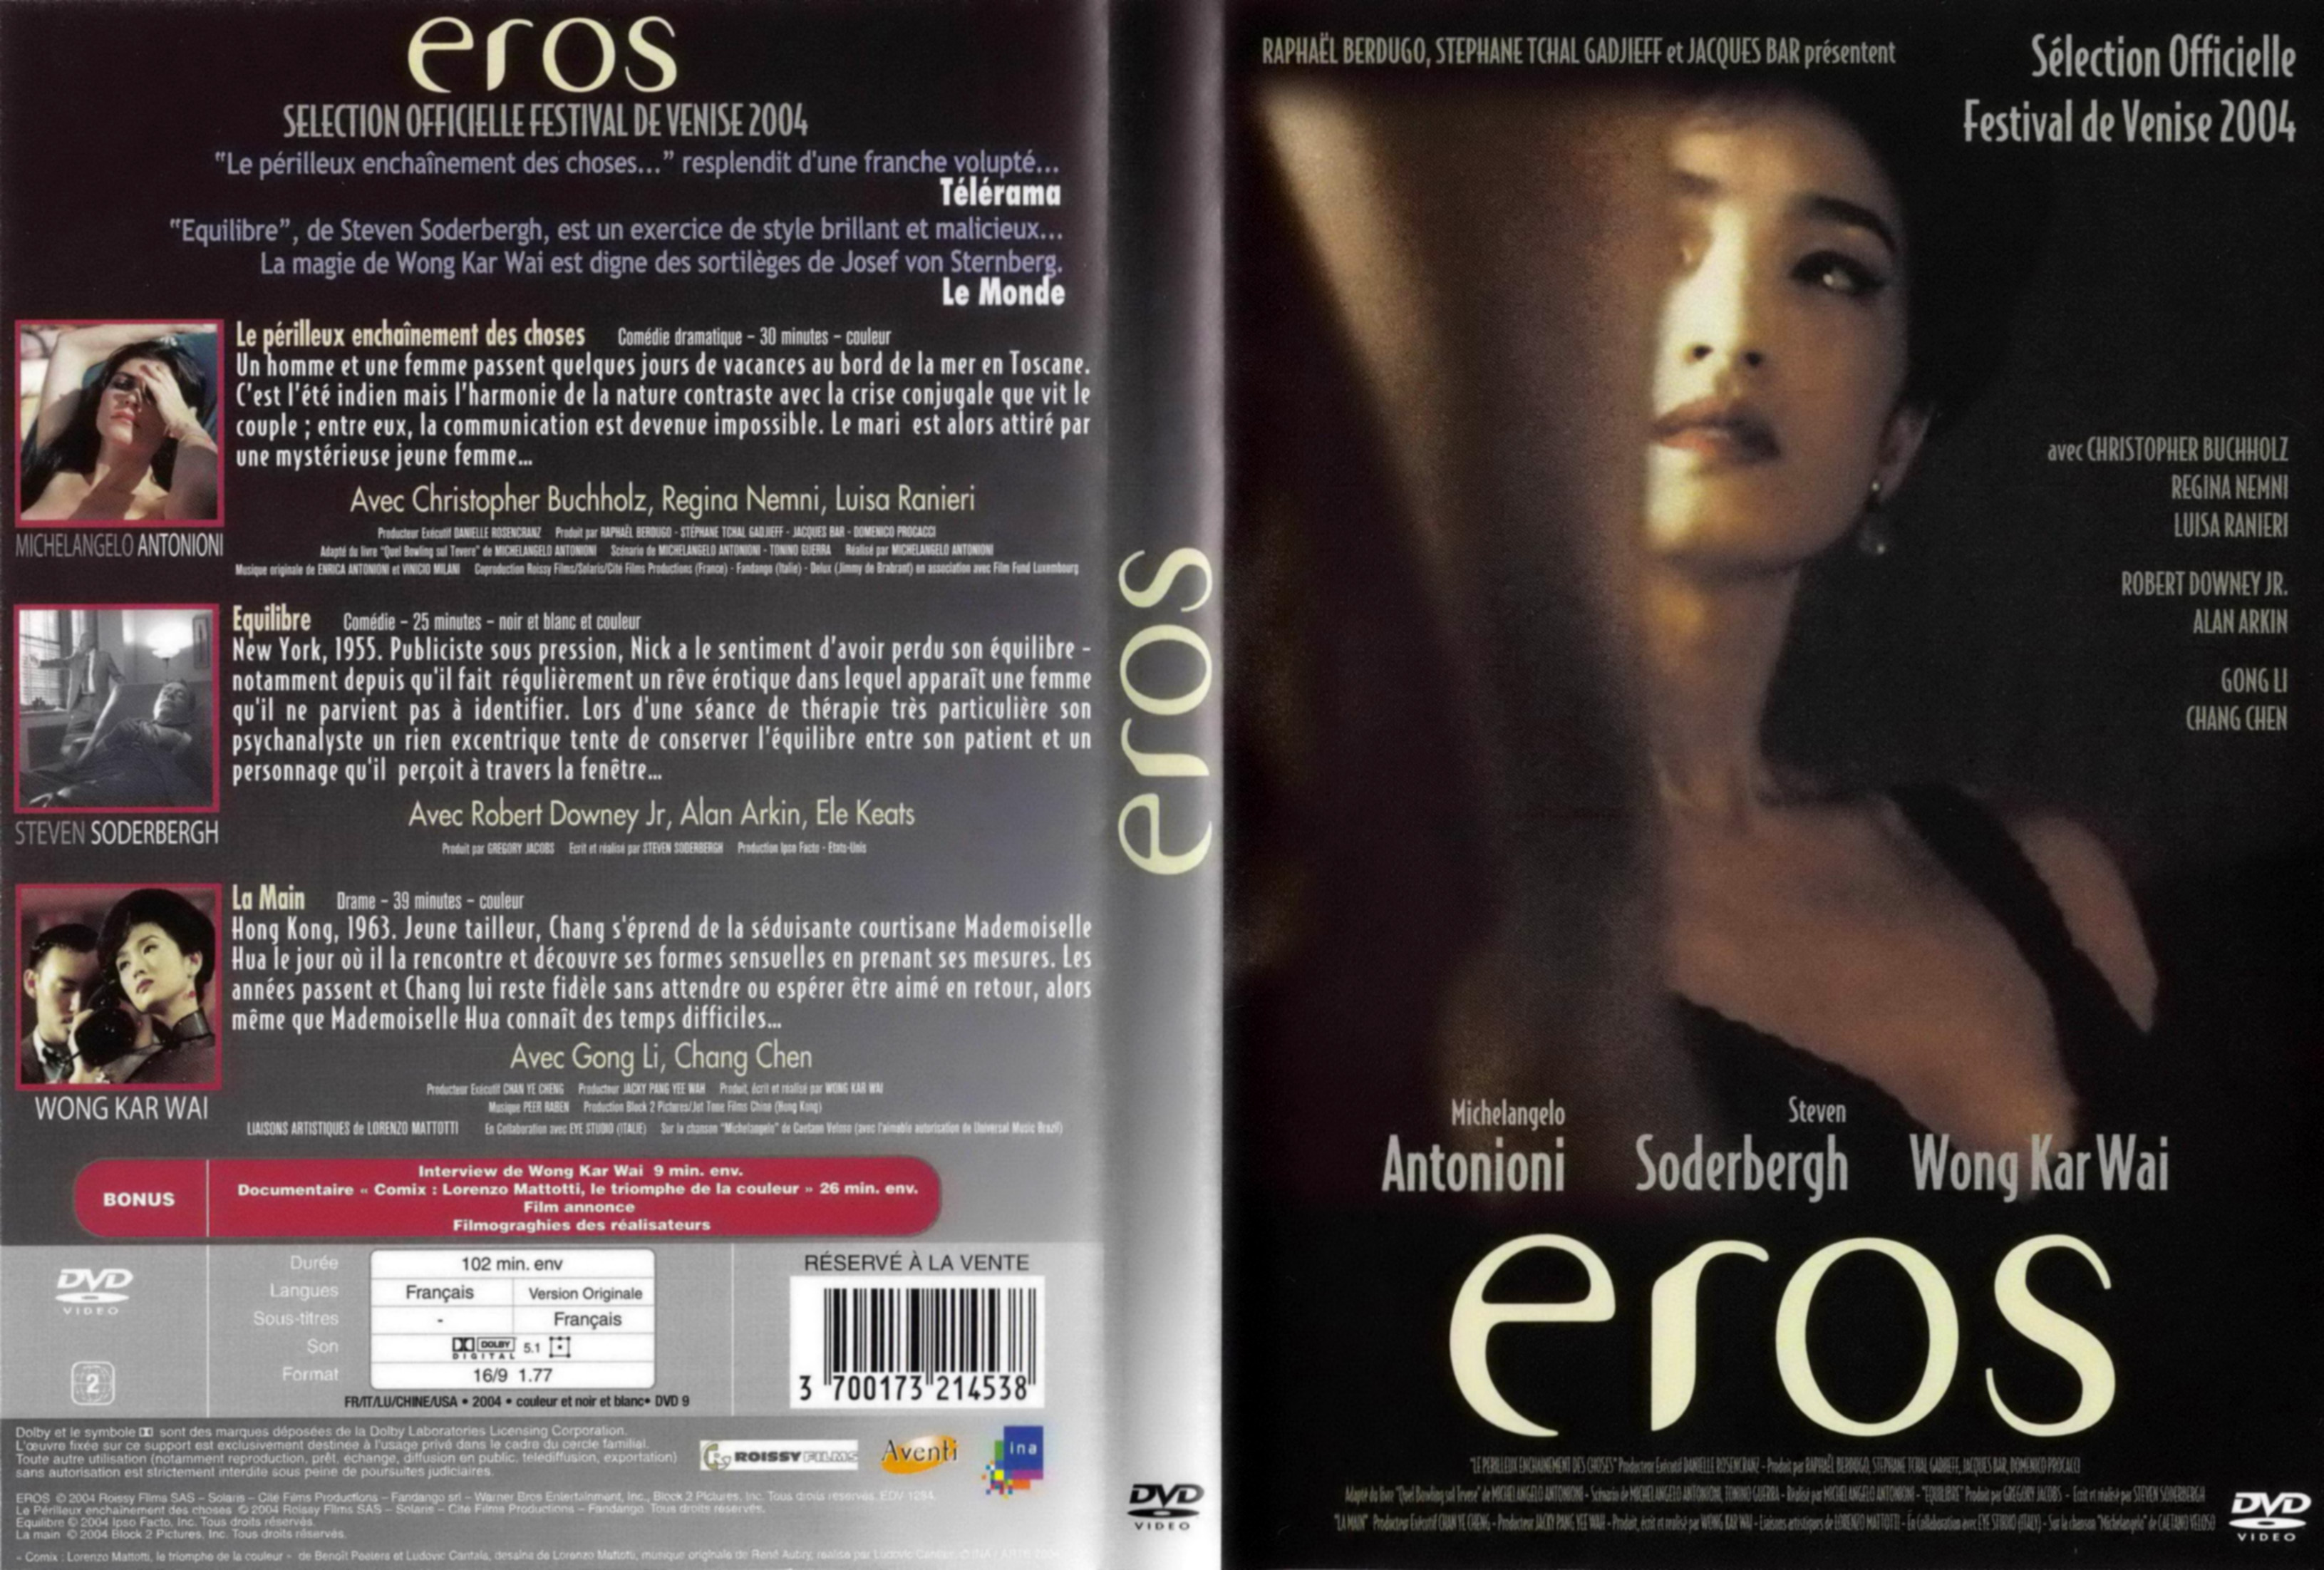 Jaquette DVD Eros v2